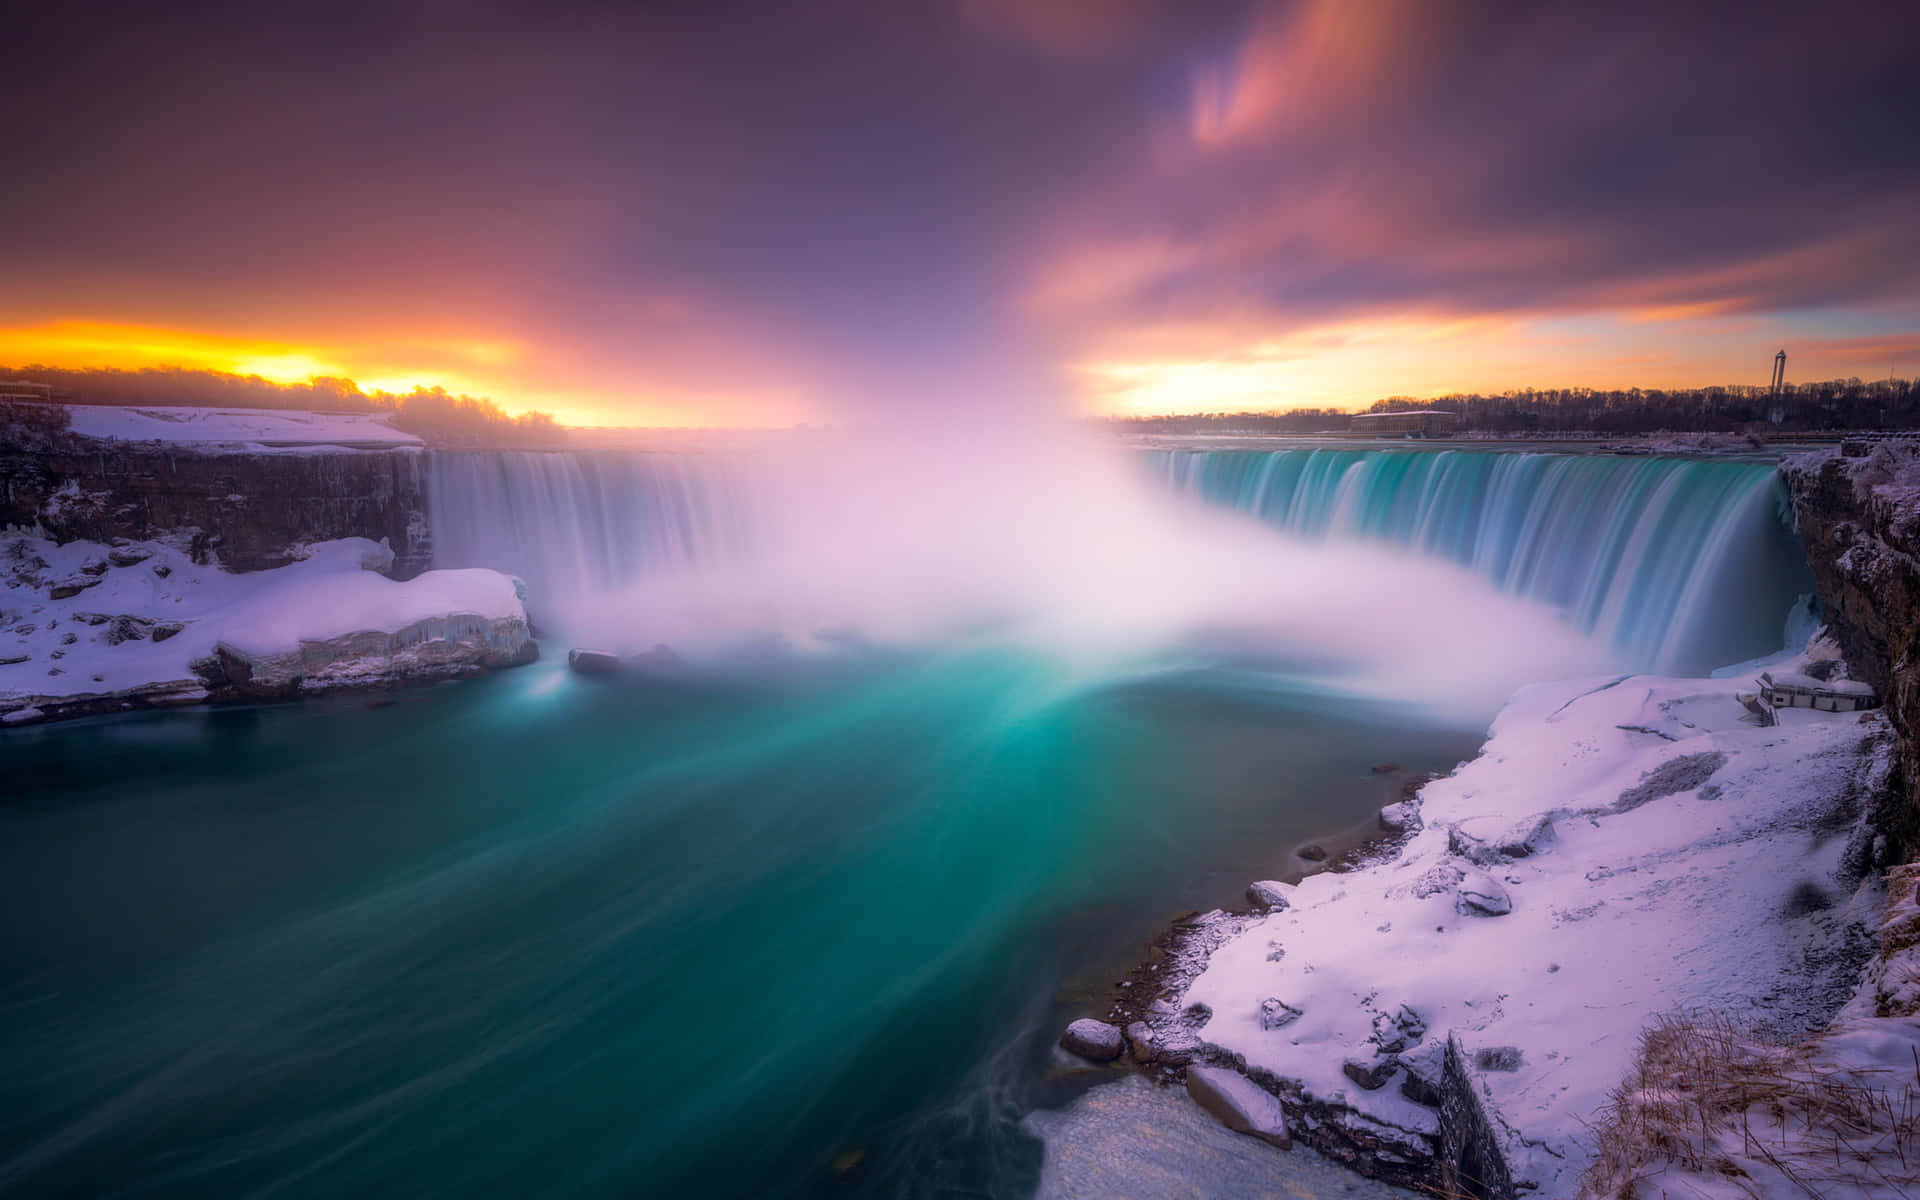 Experience the majesty of Niagara Falls